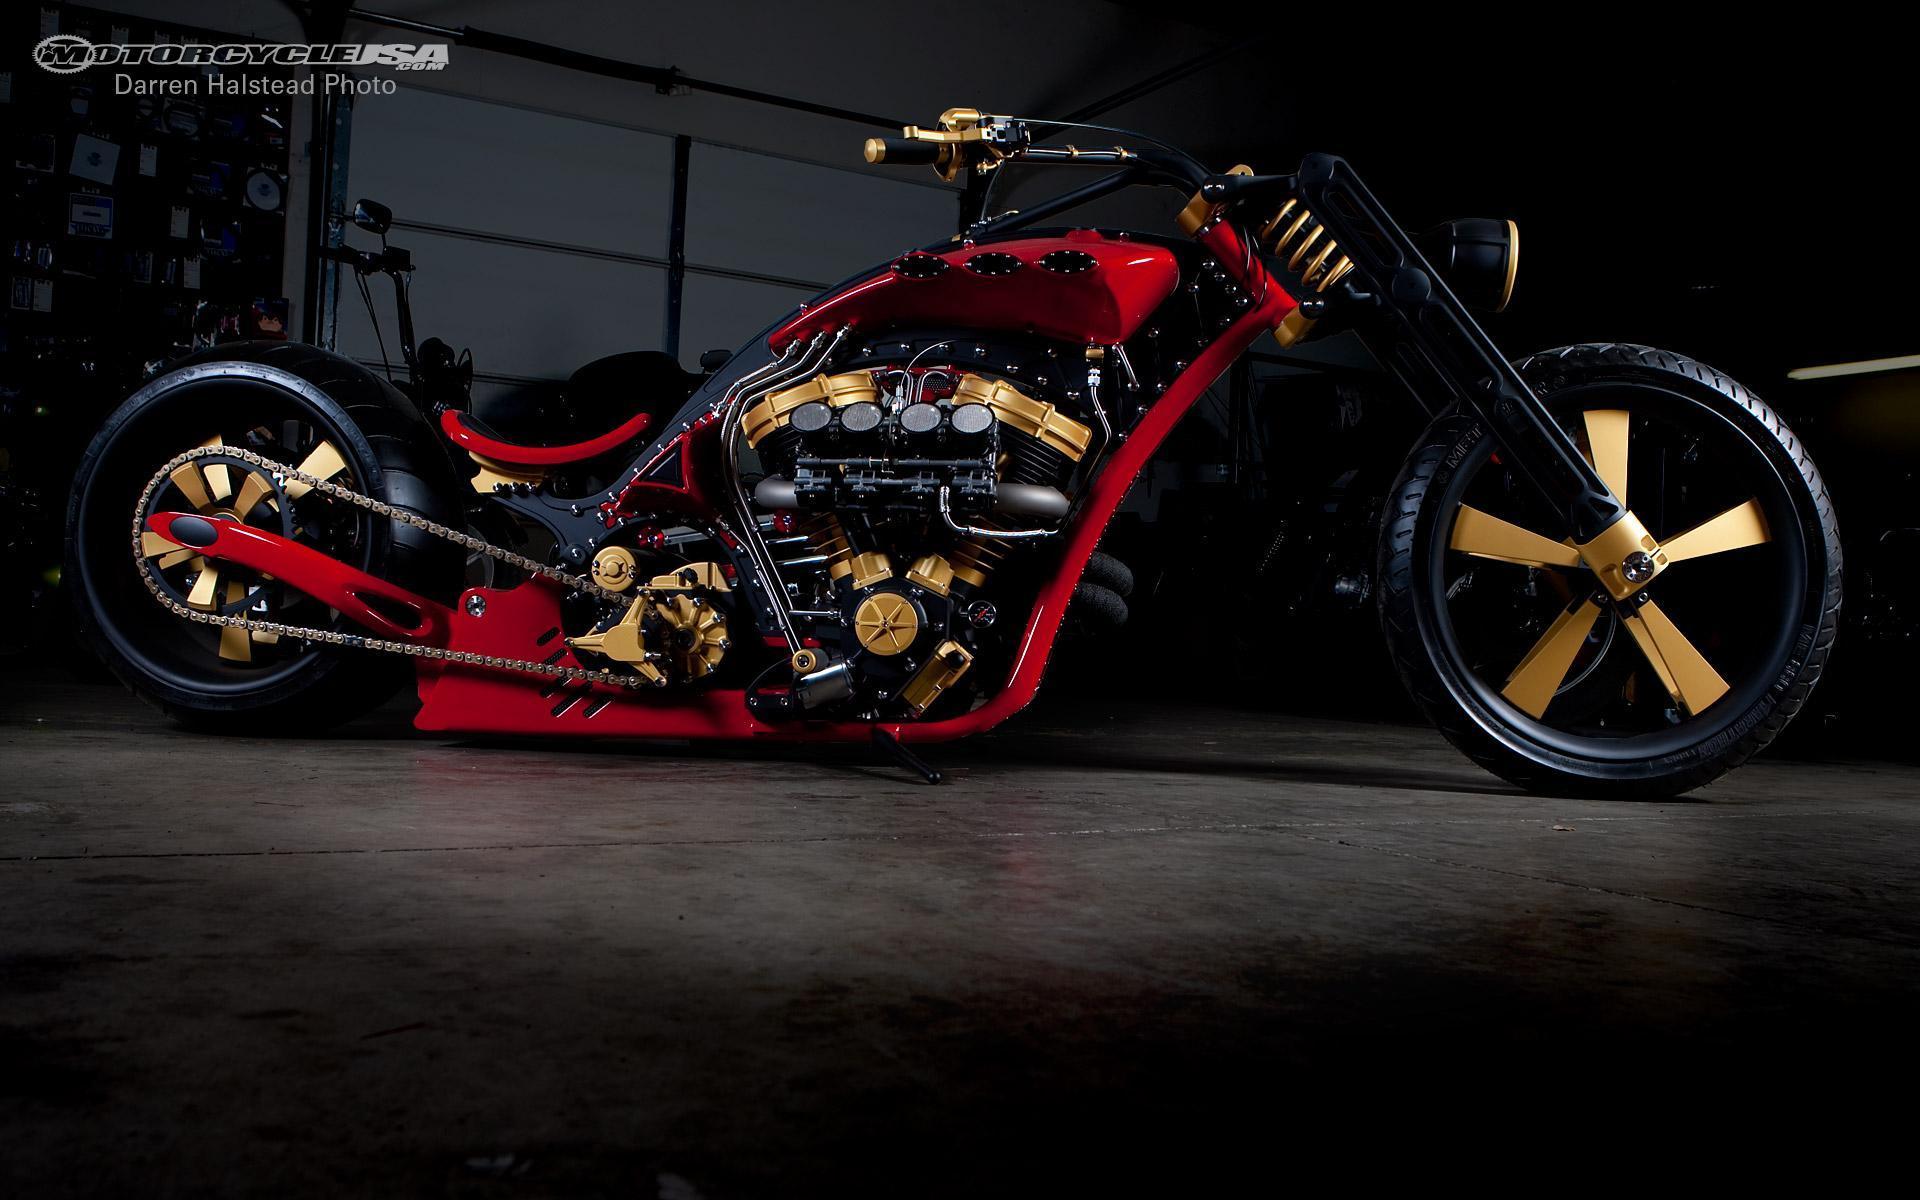 Harley Davidson Bikes Wallpaper Hd 2012 2.com